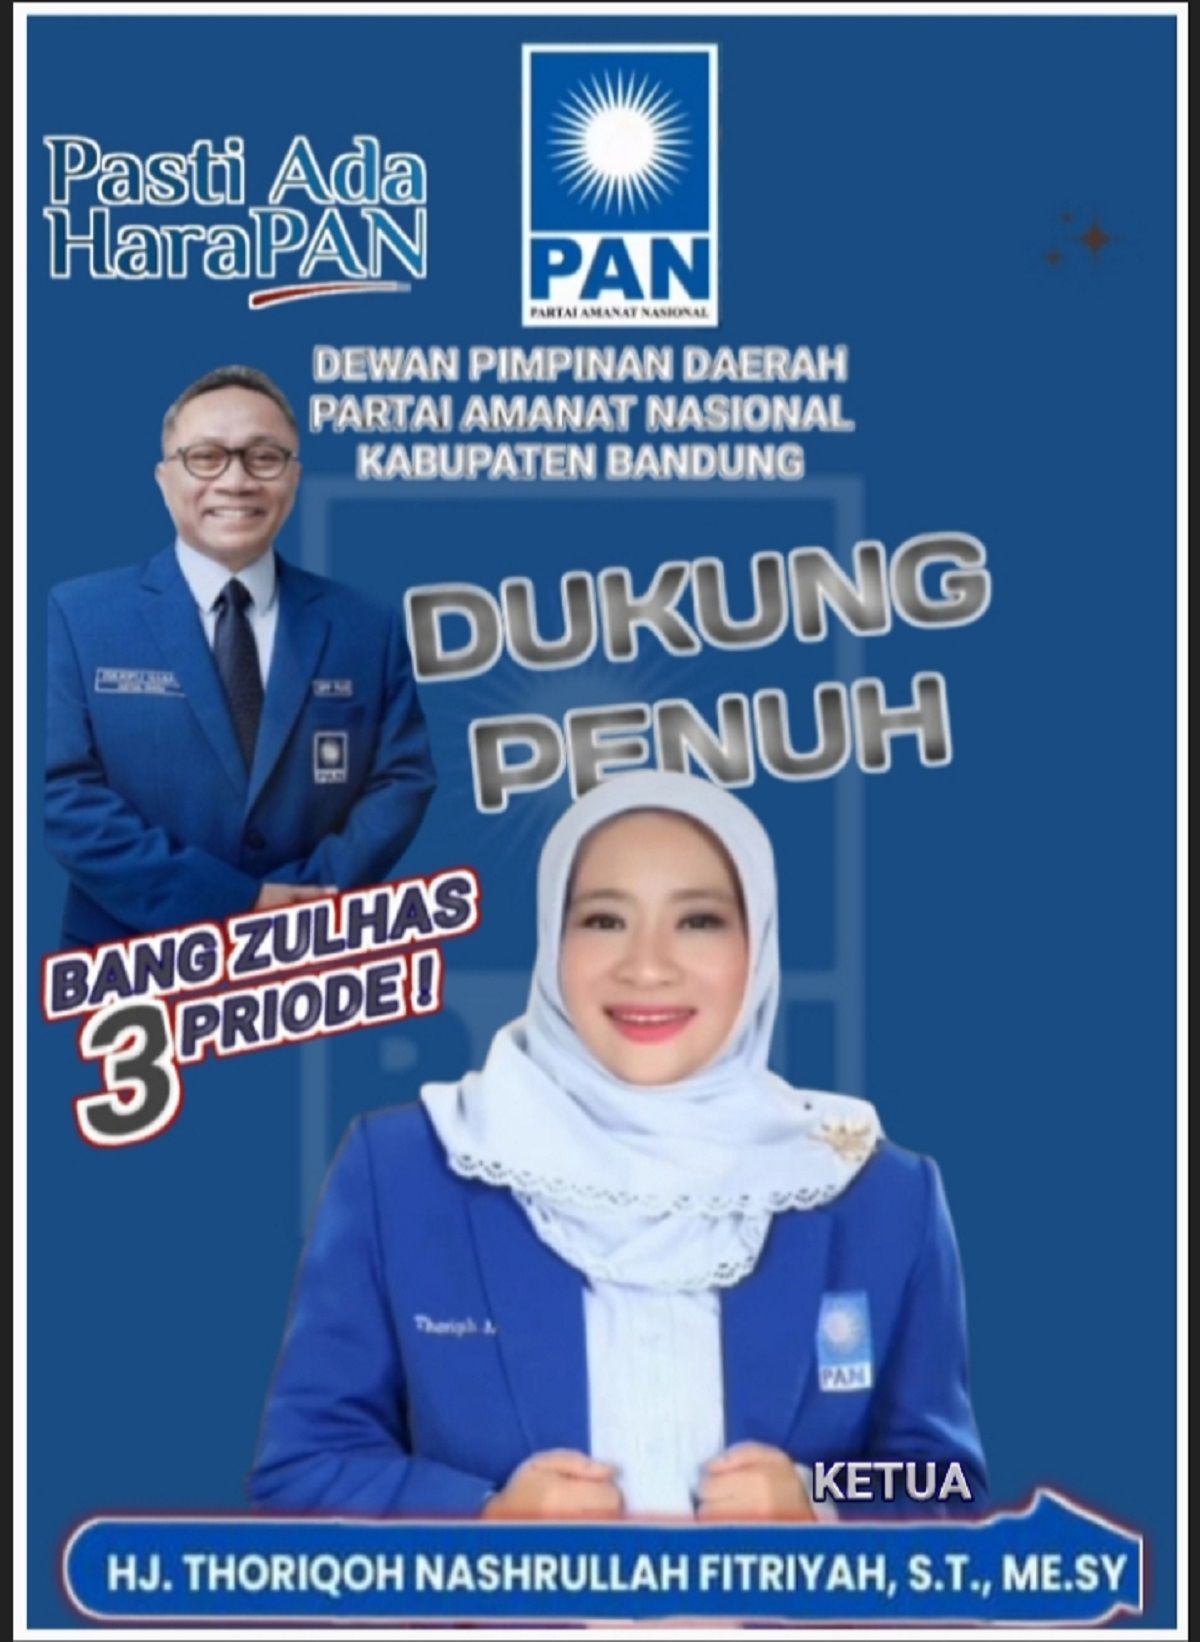 PAN Kabupaten Bandung dukung penuh Zulkifli Hasan kembali memimpin PAN./IST